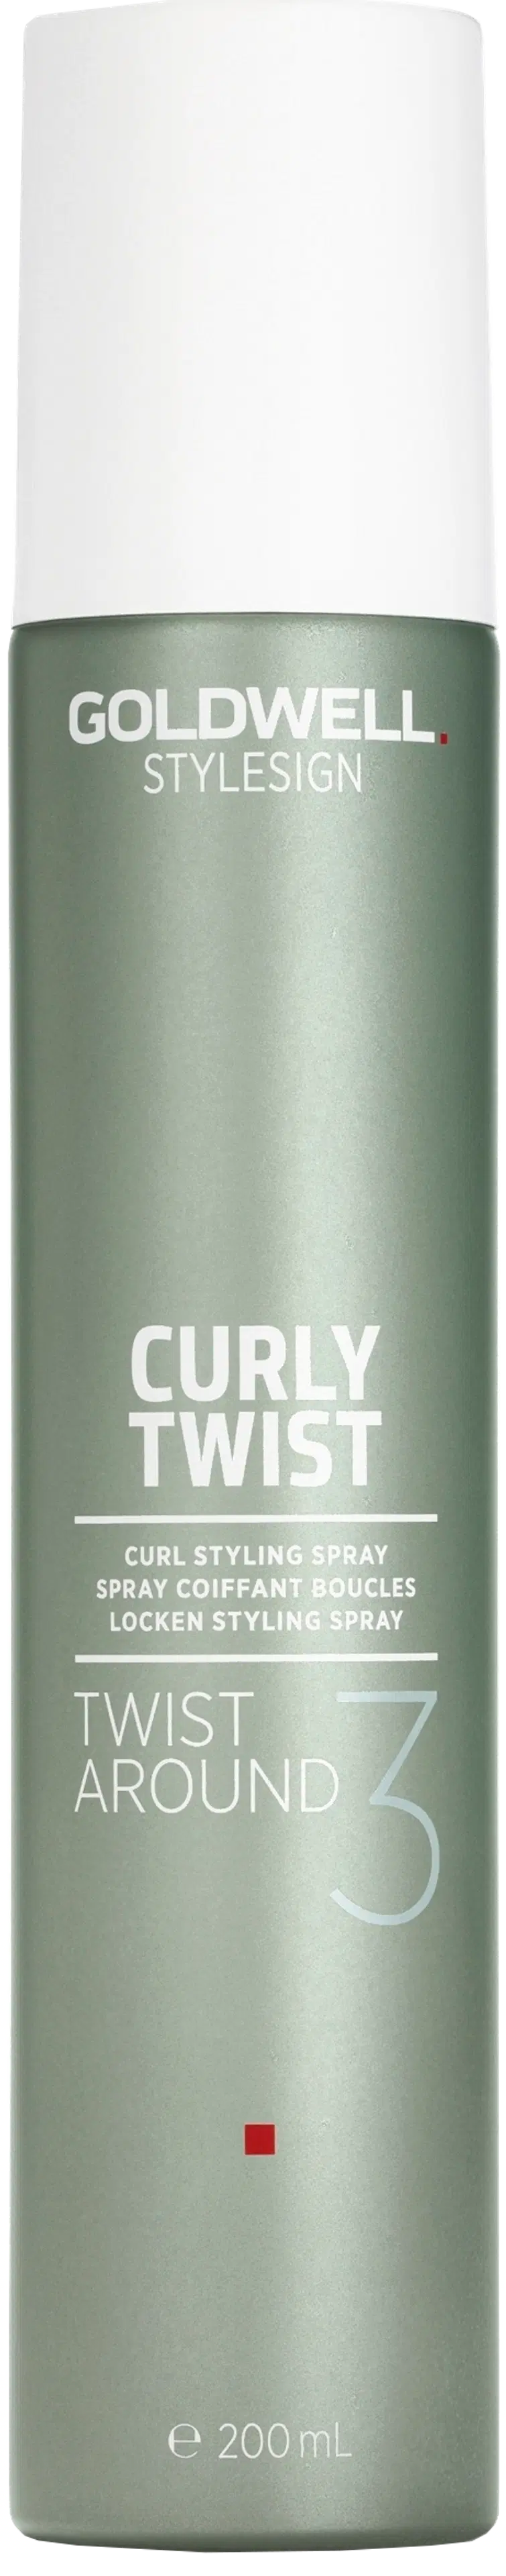 Goldwell StyleSign Curly Twist Around 3 muotoilusuihke 200 ml